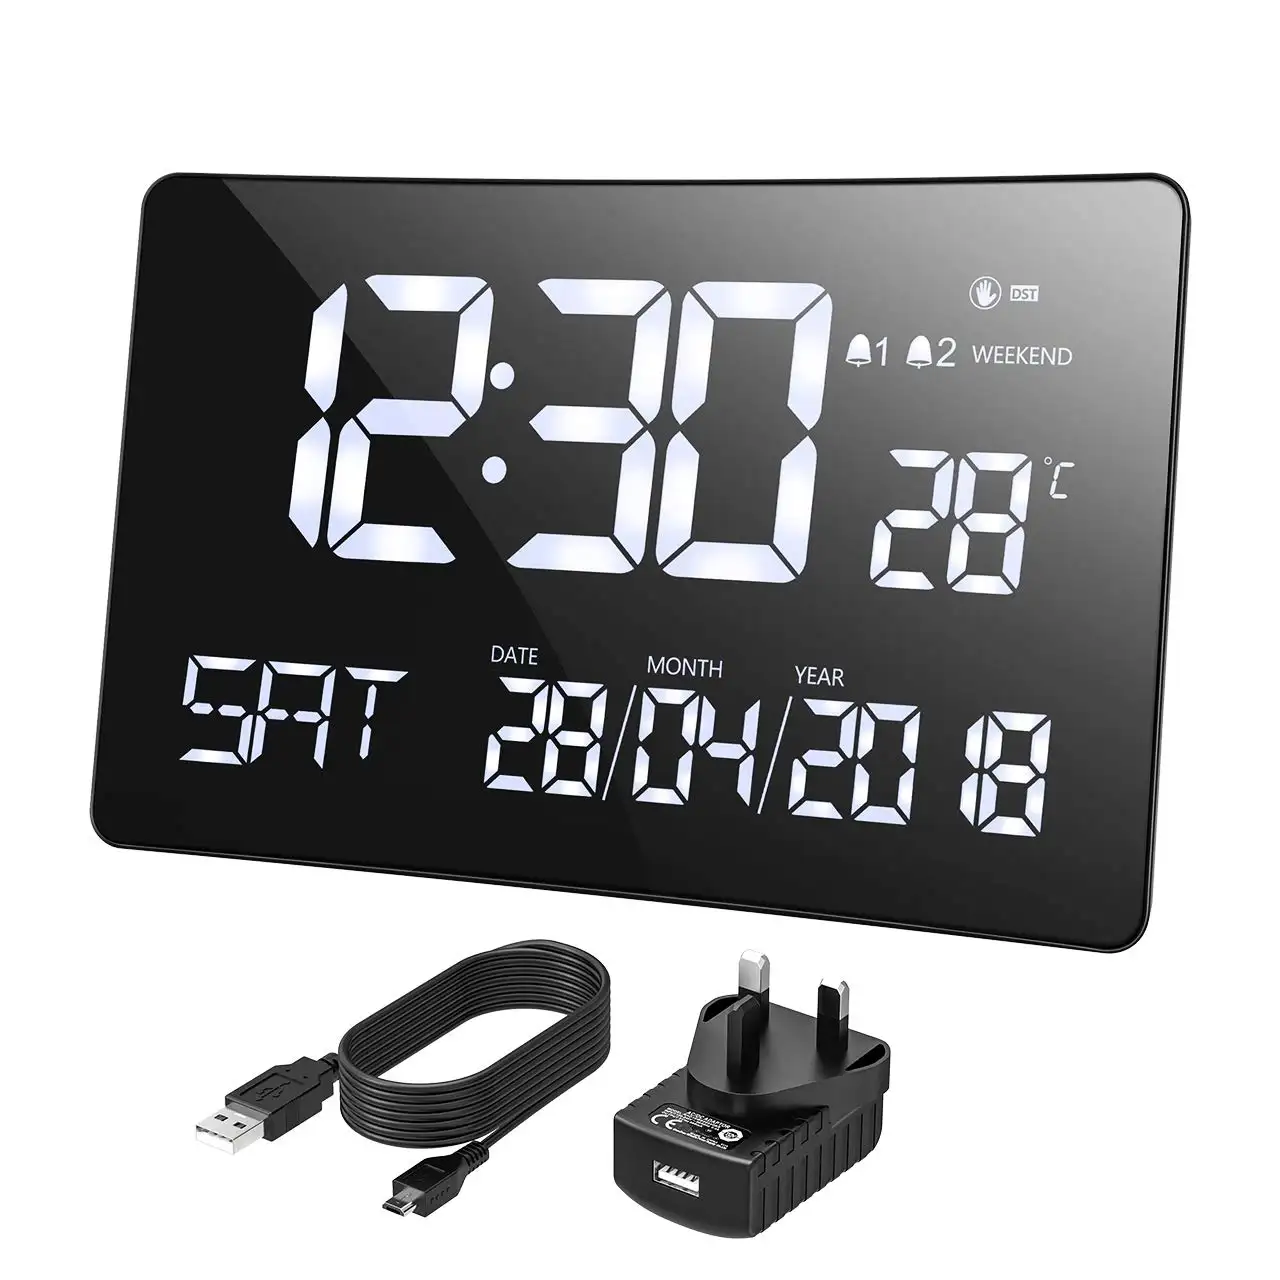 Big size wall clock digital LCD wall clock with temperature